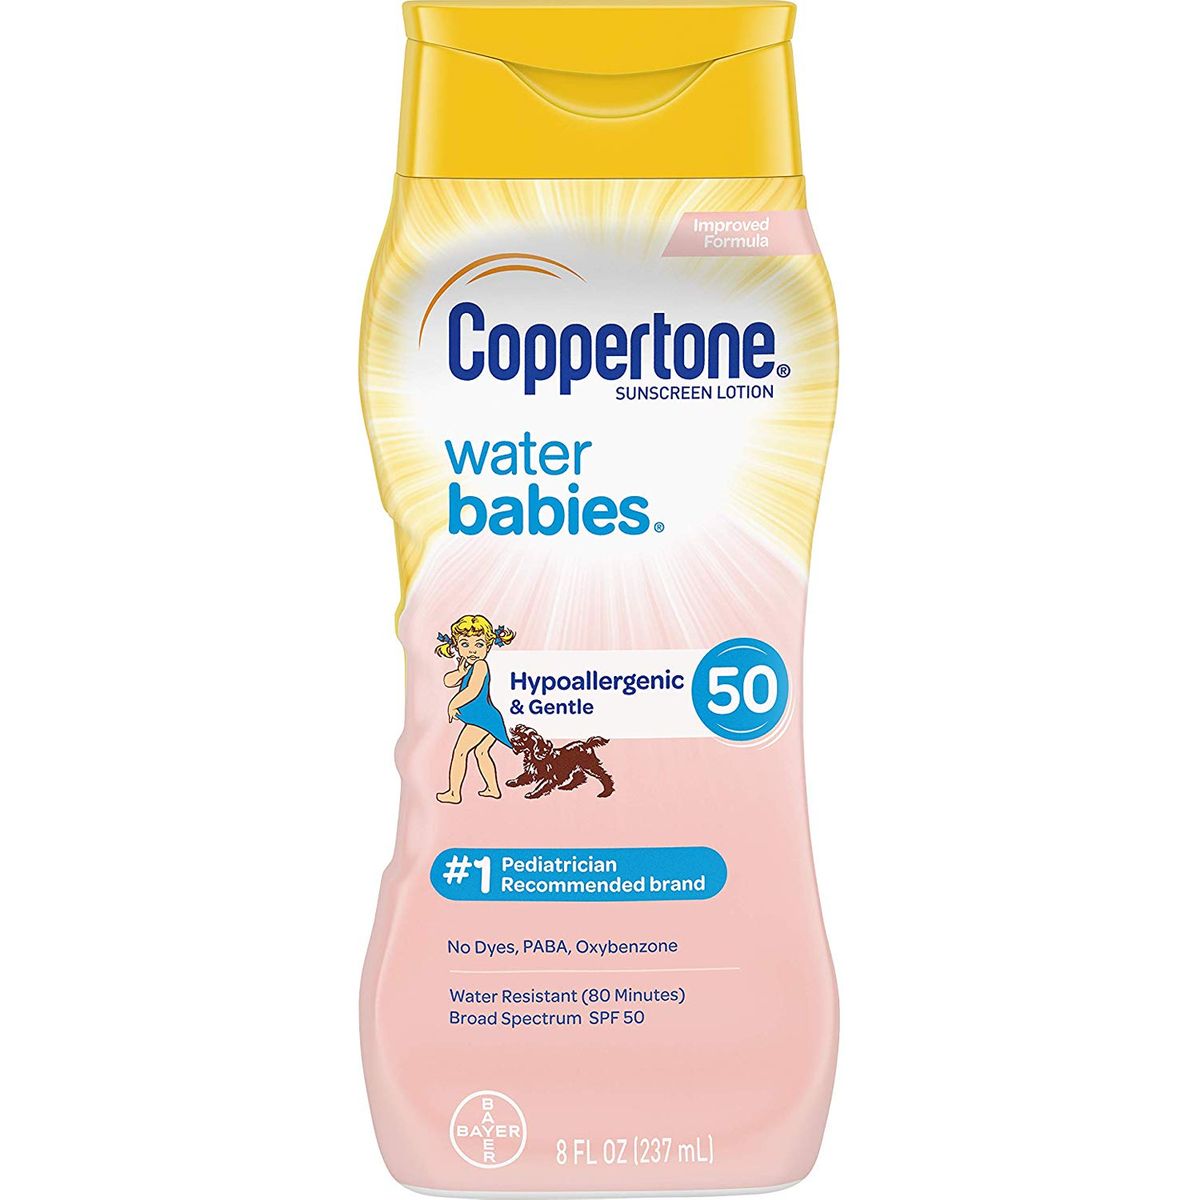 Coppertone WaterBabies Sunscreen Lotion Breed Spectrum SPF 50